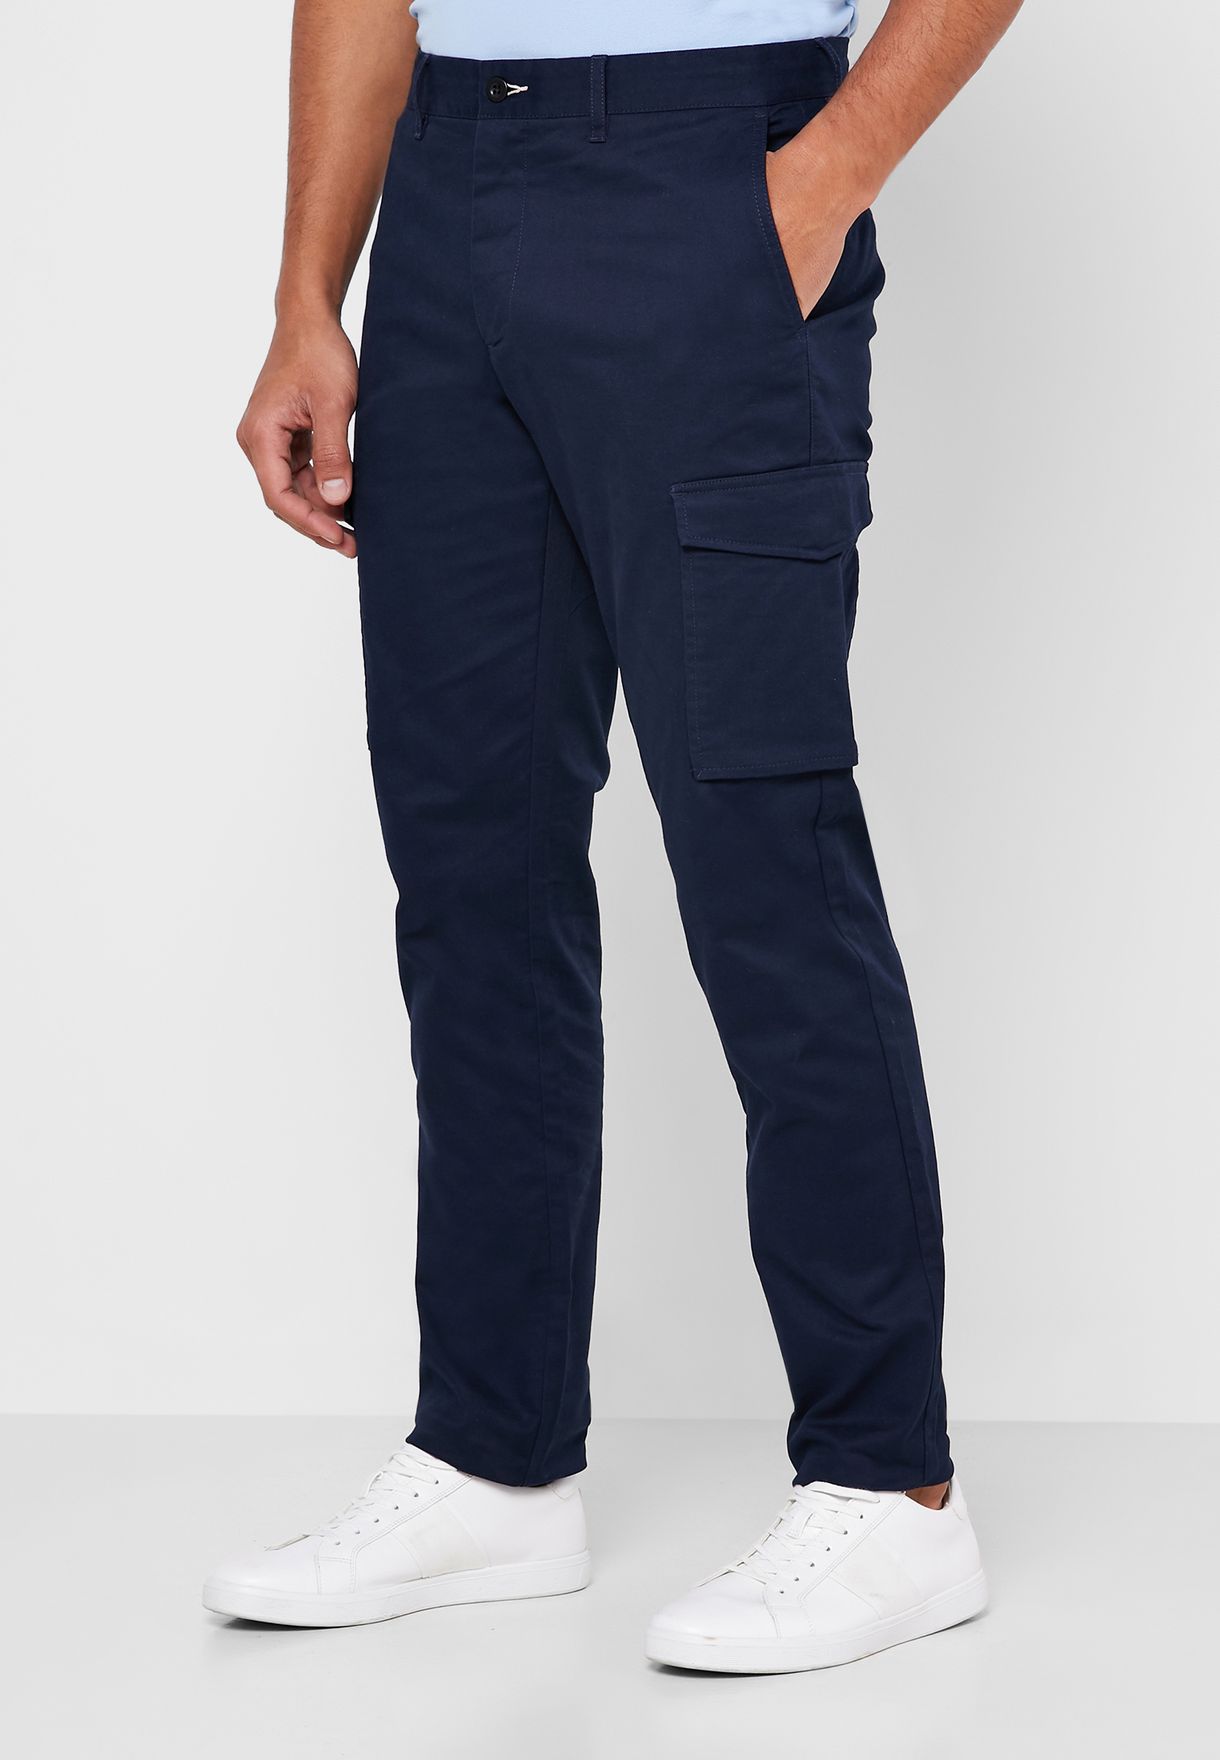 navy blue cargo pants skinny